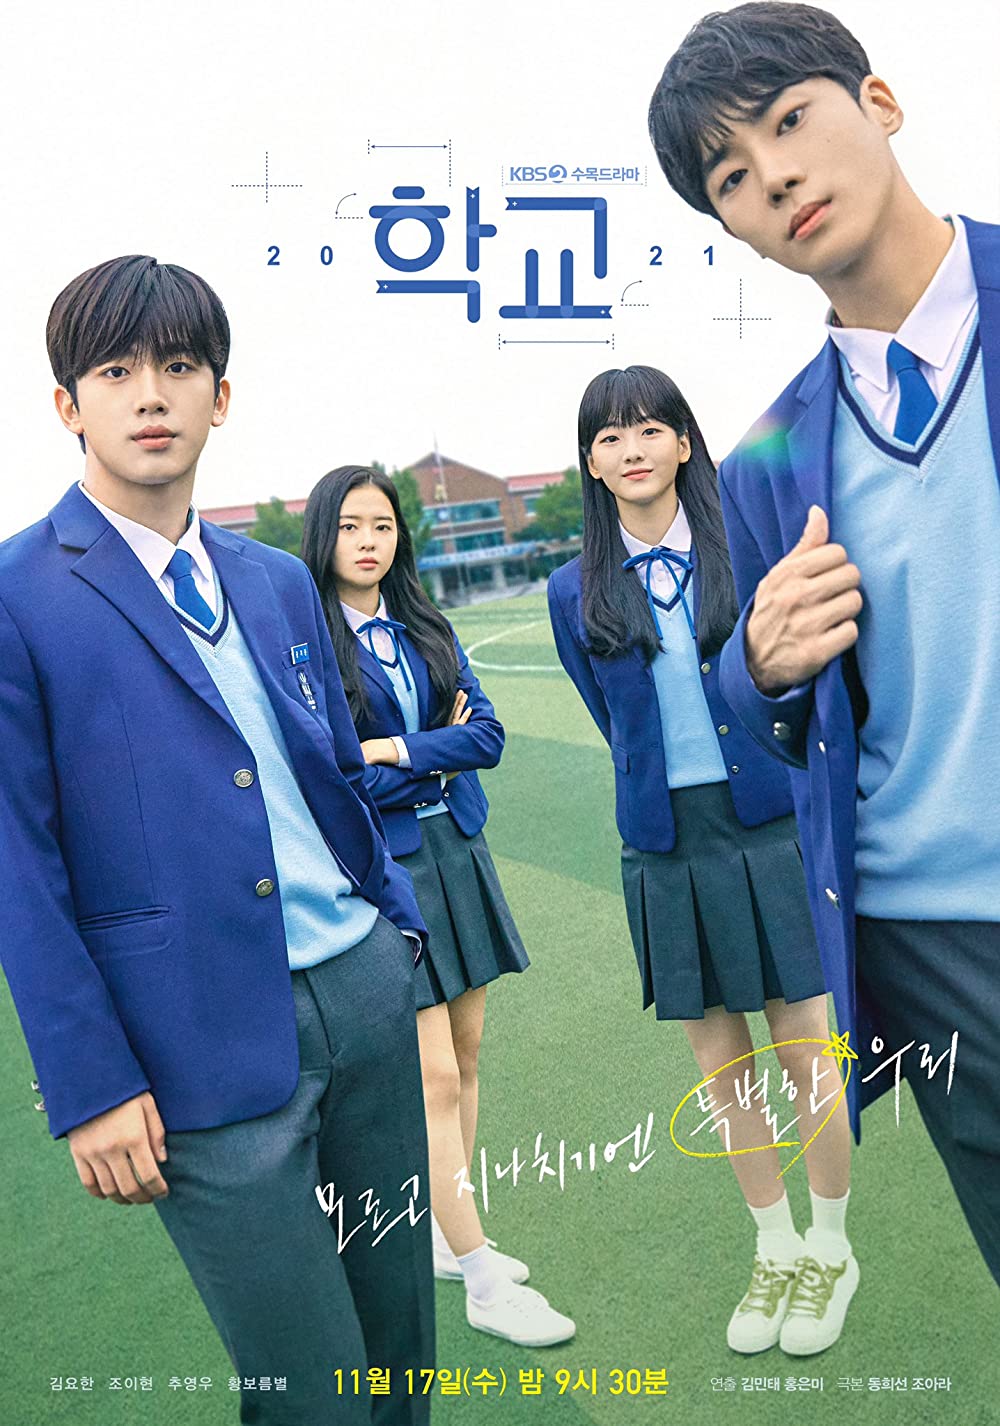 11 Drama Korea remaja, All of Us Are Dead kisahkan zombi di sekolah